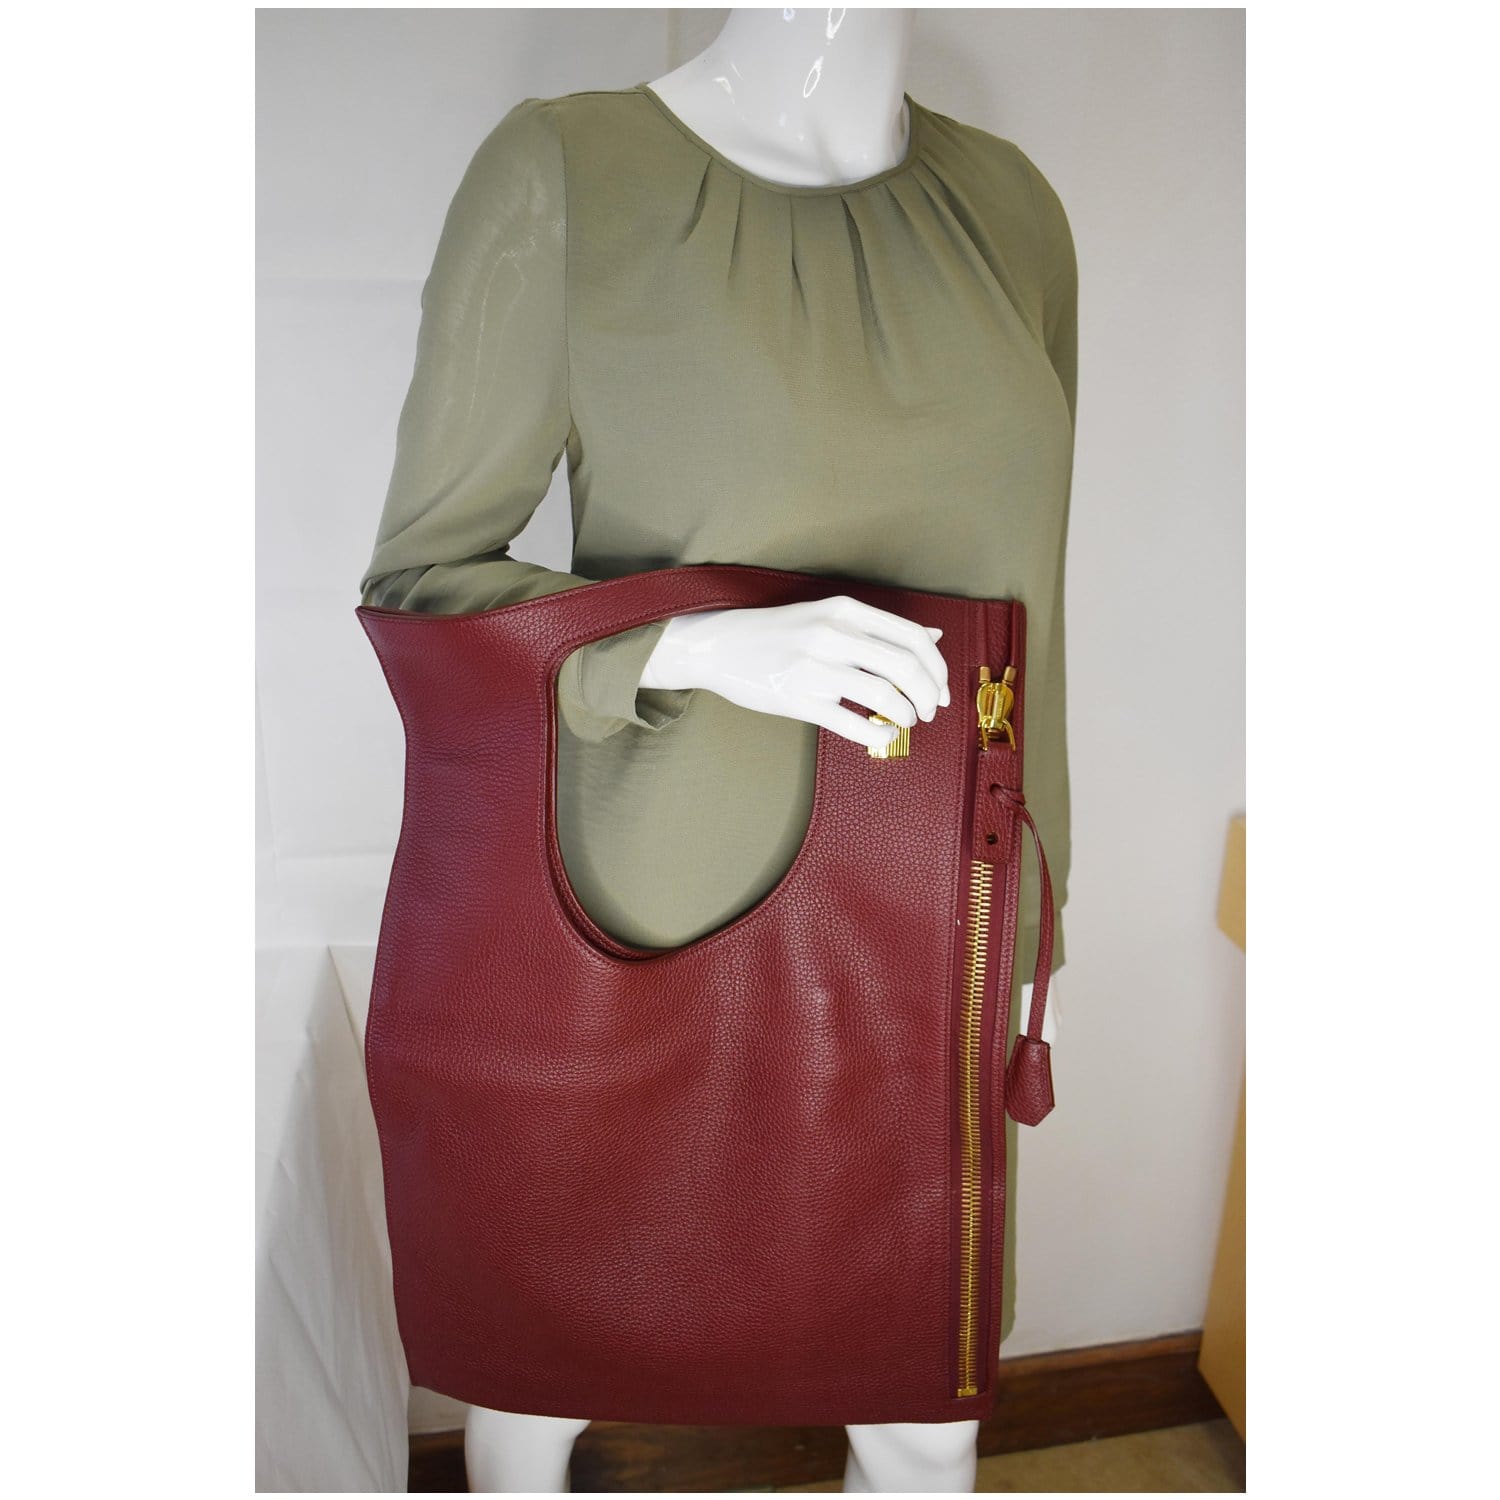 Tom Ford Handbag - Alix - Nude Textured Leather Gold Padlock Clutch Bag